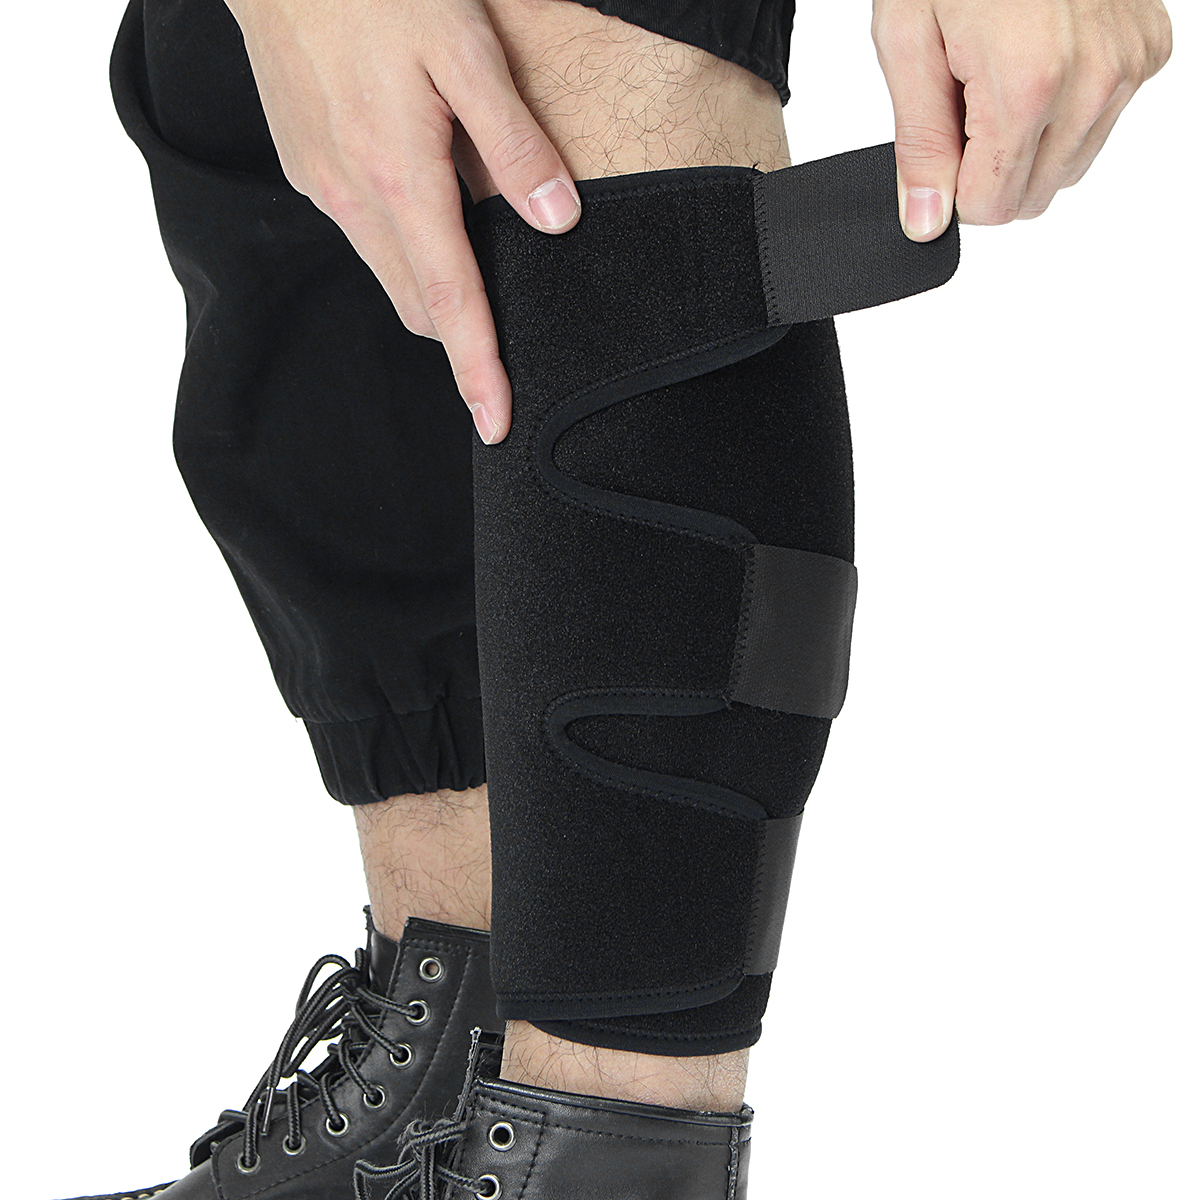 

Calf Compression Brace Shin Splint Sleeve Support Lower Leg Wrap Muscle Pain Relief